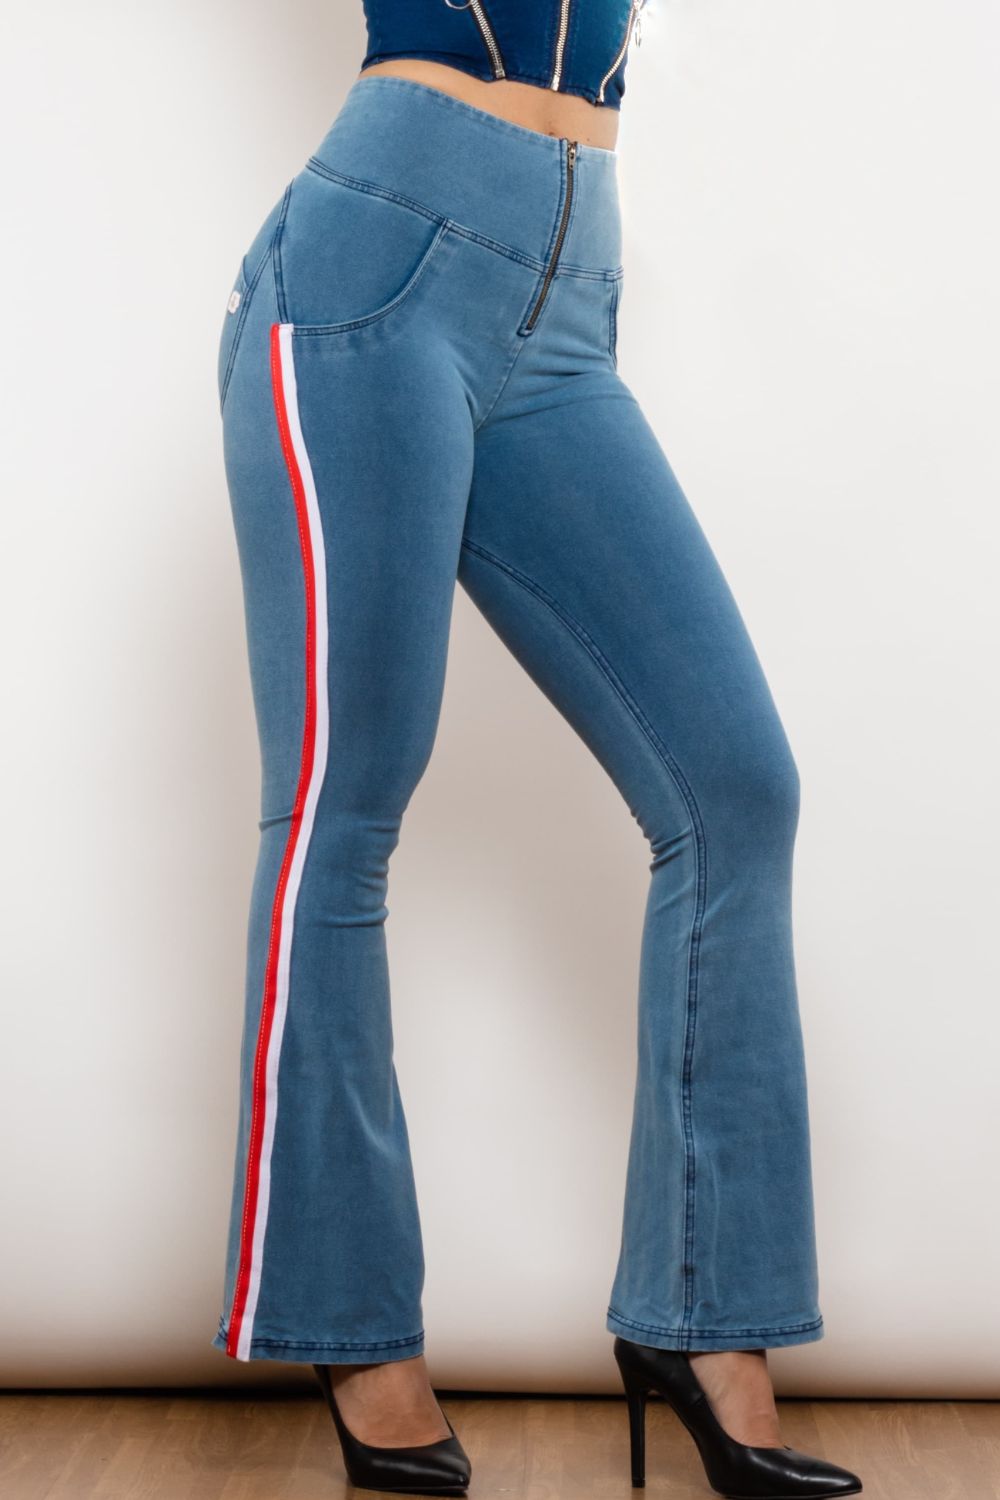 LLC Flyclothing Stripe Closure – Bootcut Zip Jeans Side